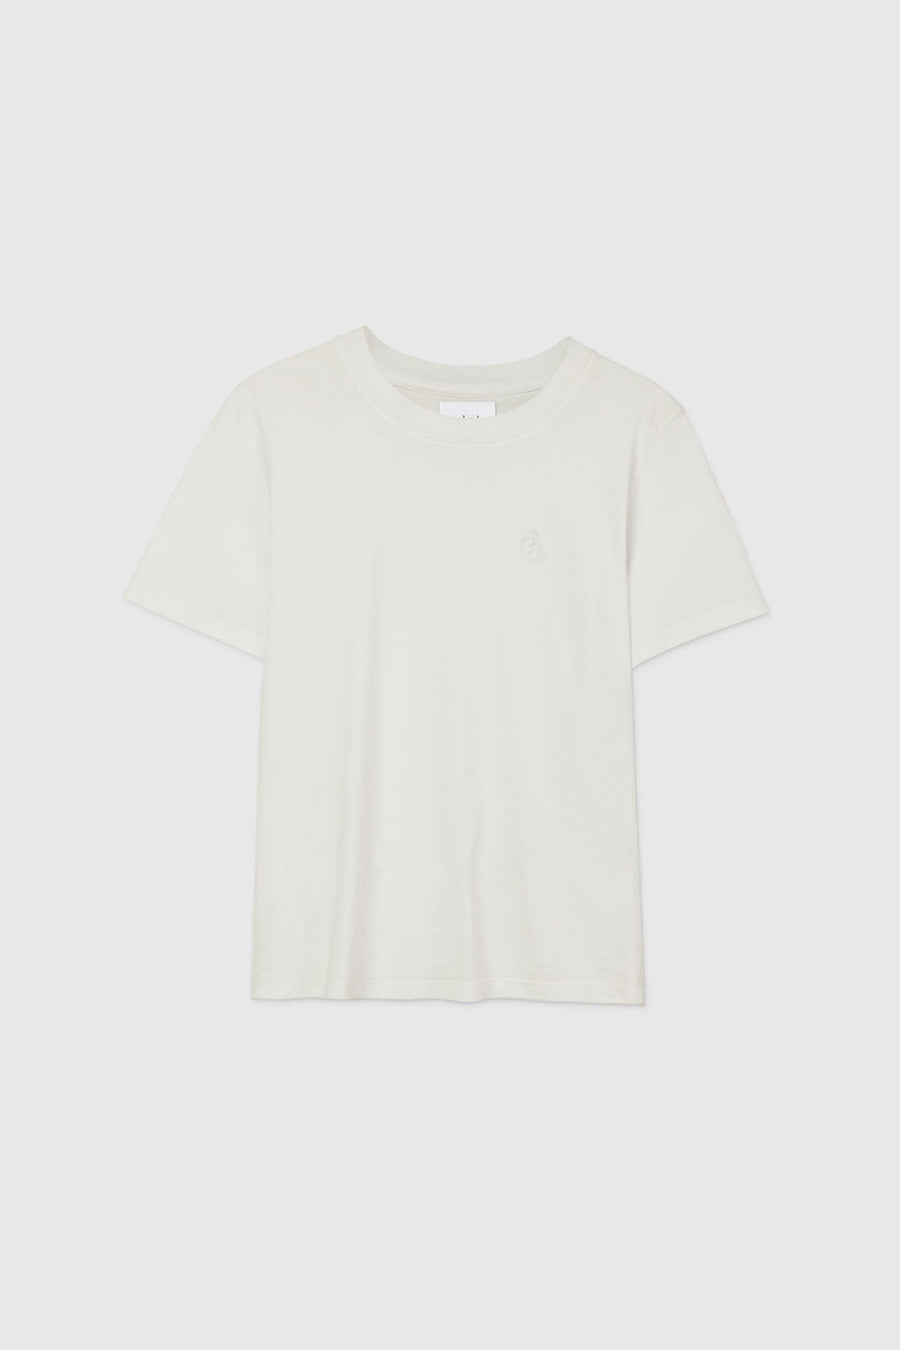 Essential Organic Cotton T-shirt - dāl the label-Soft White